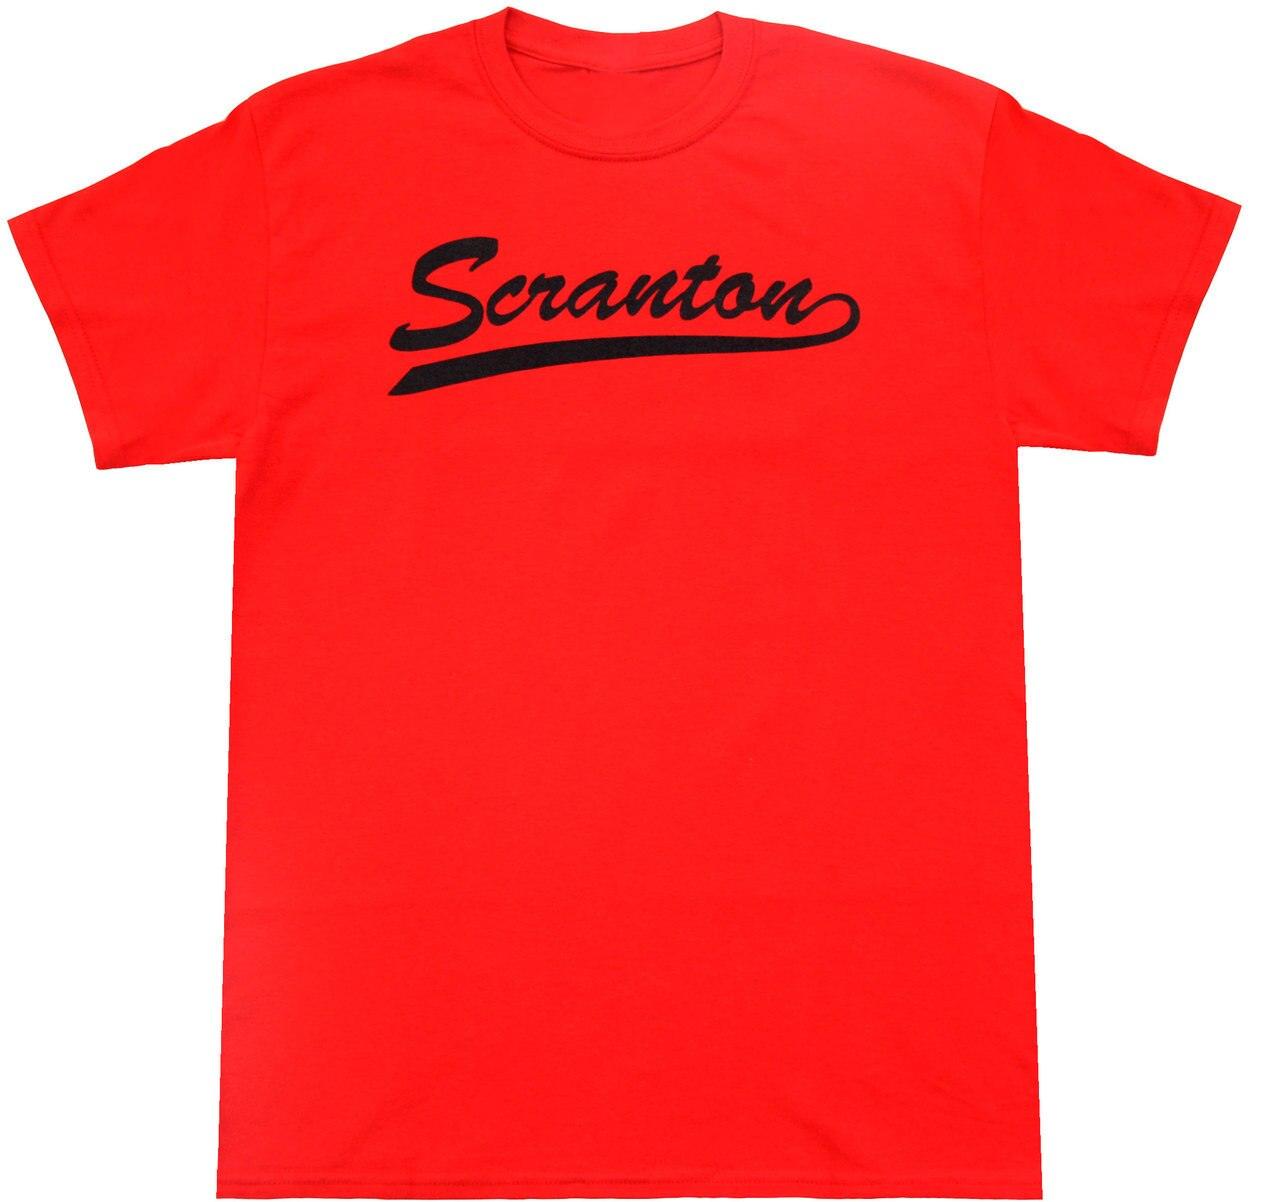 The Office Dunder Mifflin Scranton Branch Picnic Red T-shirt - The Office